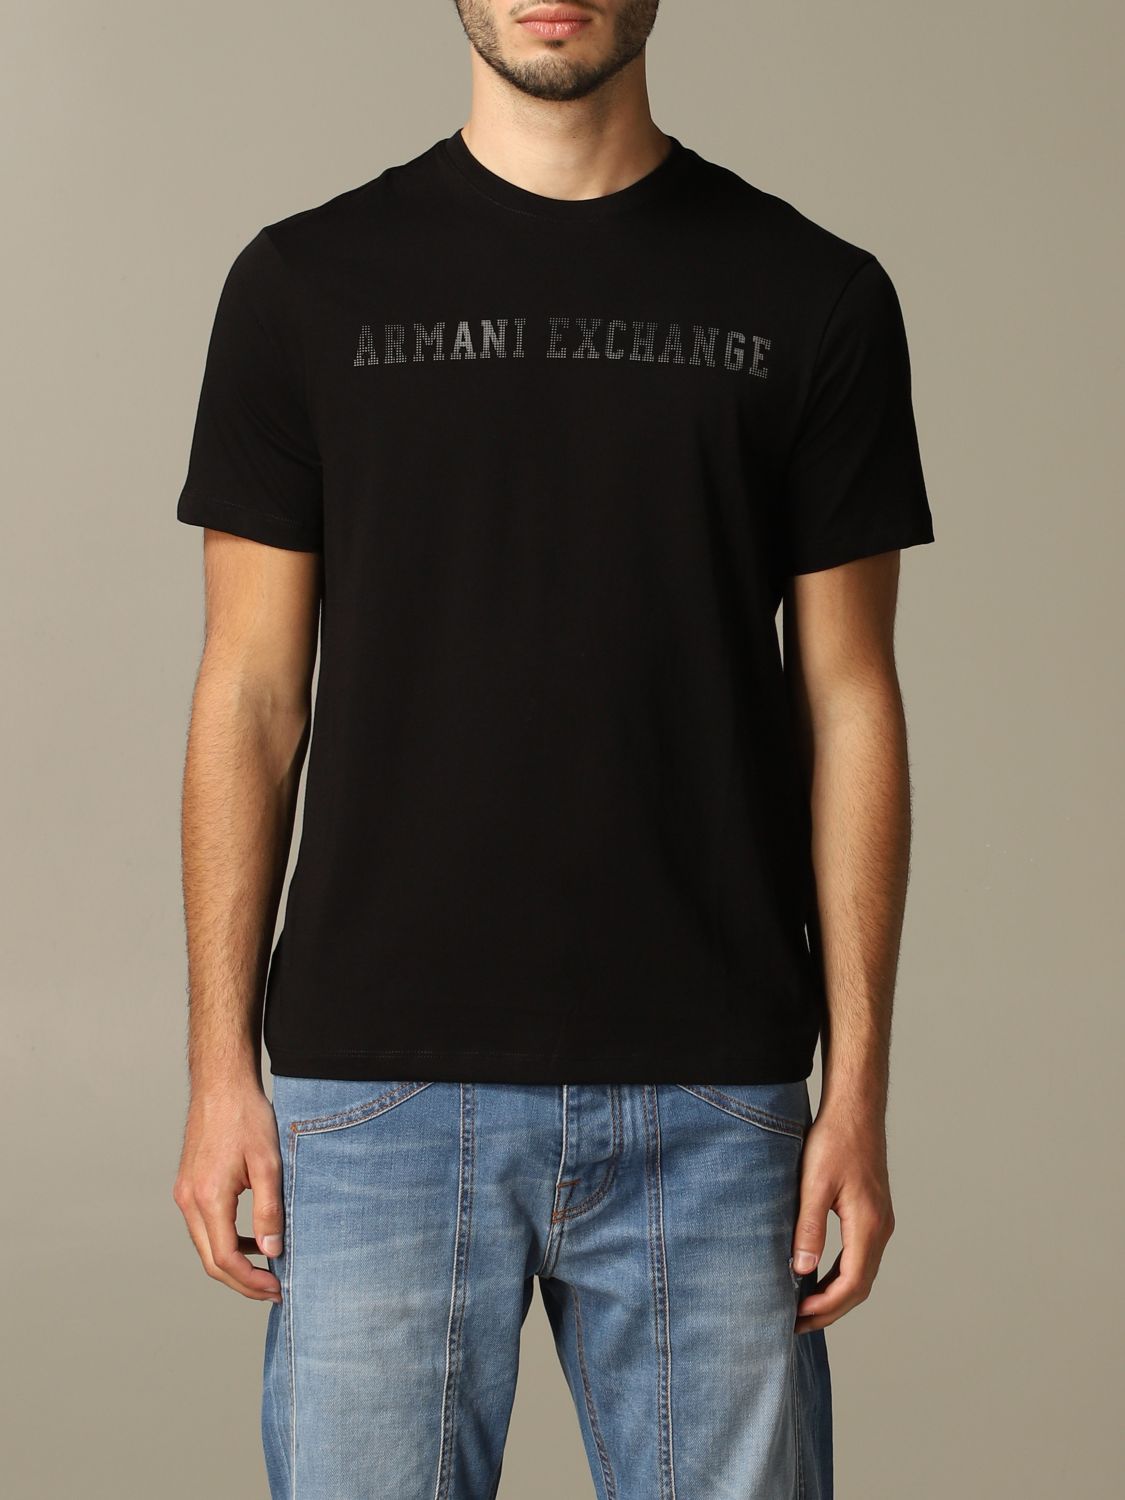 Armani Exchange Outlet: t-shirt with big logo - Black | Armani Exchange ...